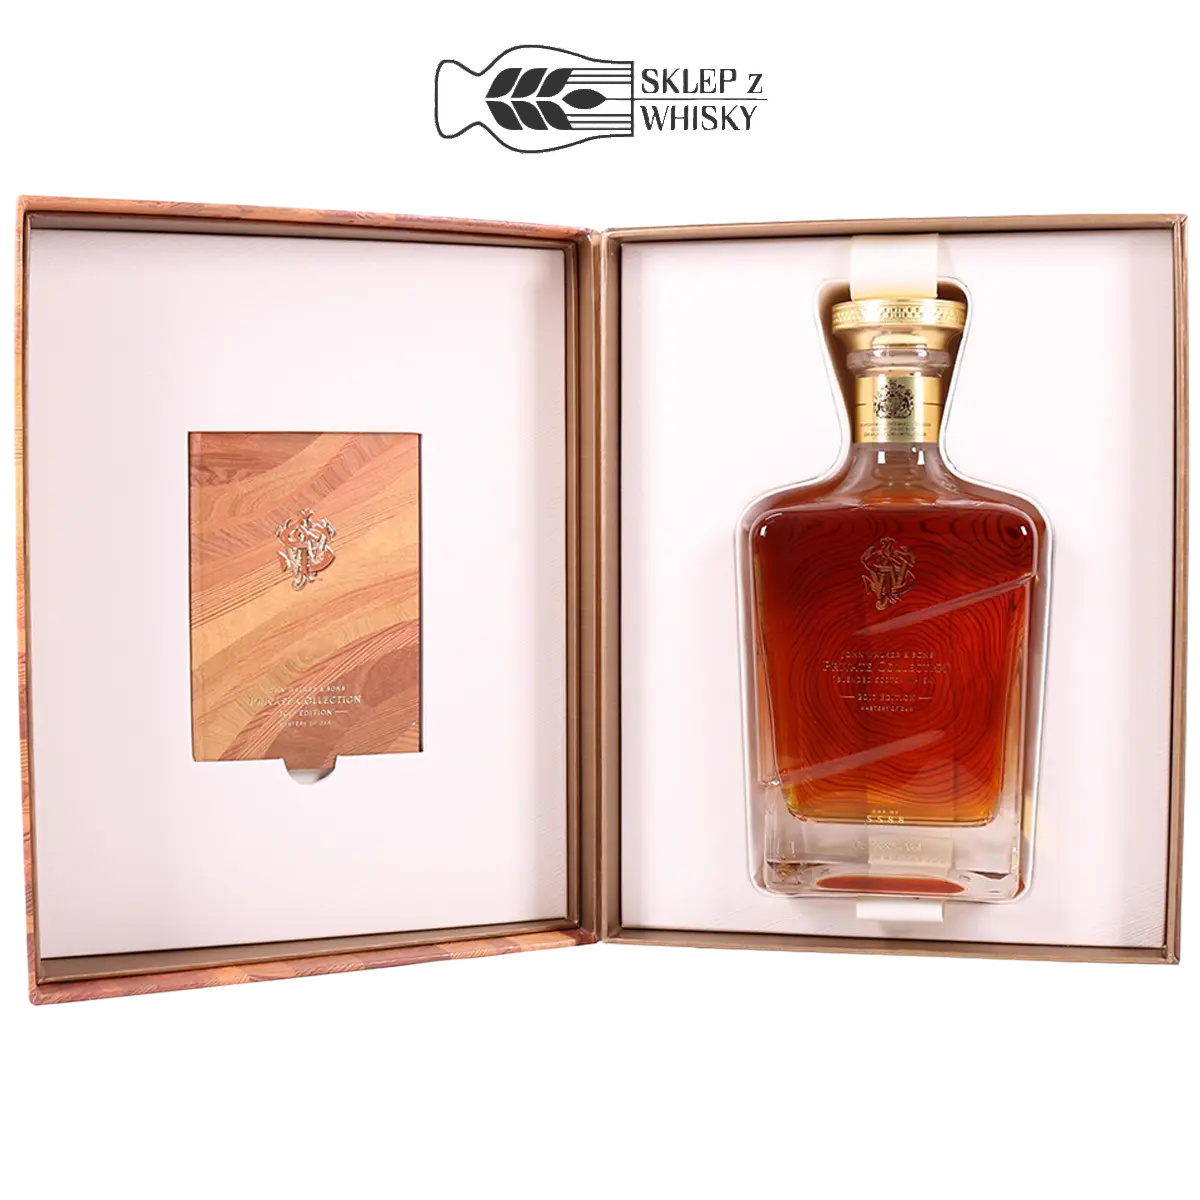 John Walker & Sons Private Collection 2017 - szkocka whisky blended, 700 ml, w eleganckim pudełku